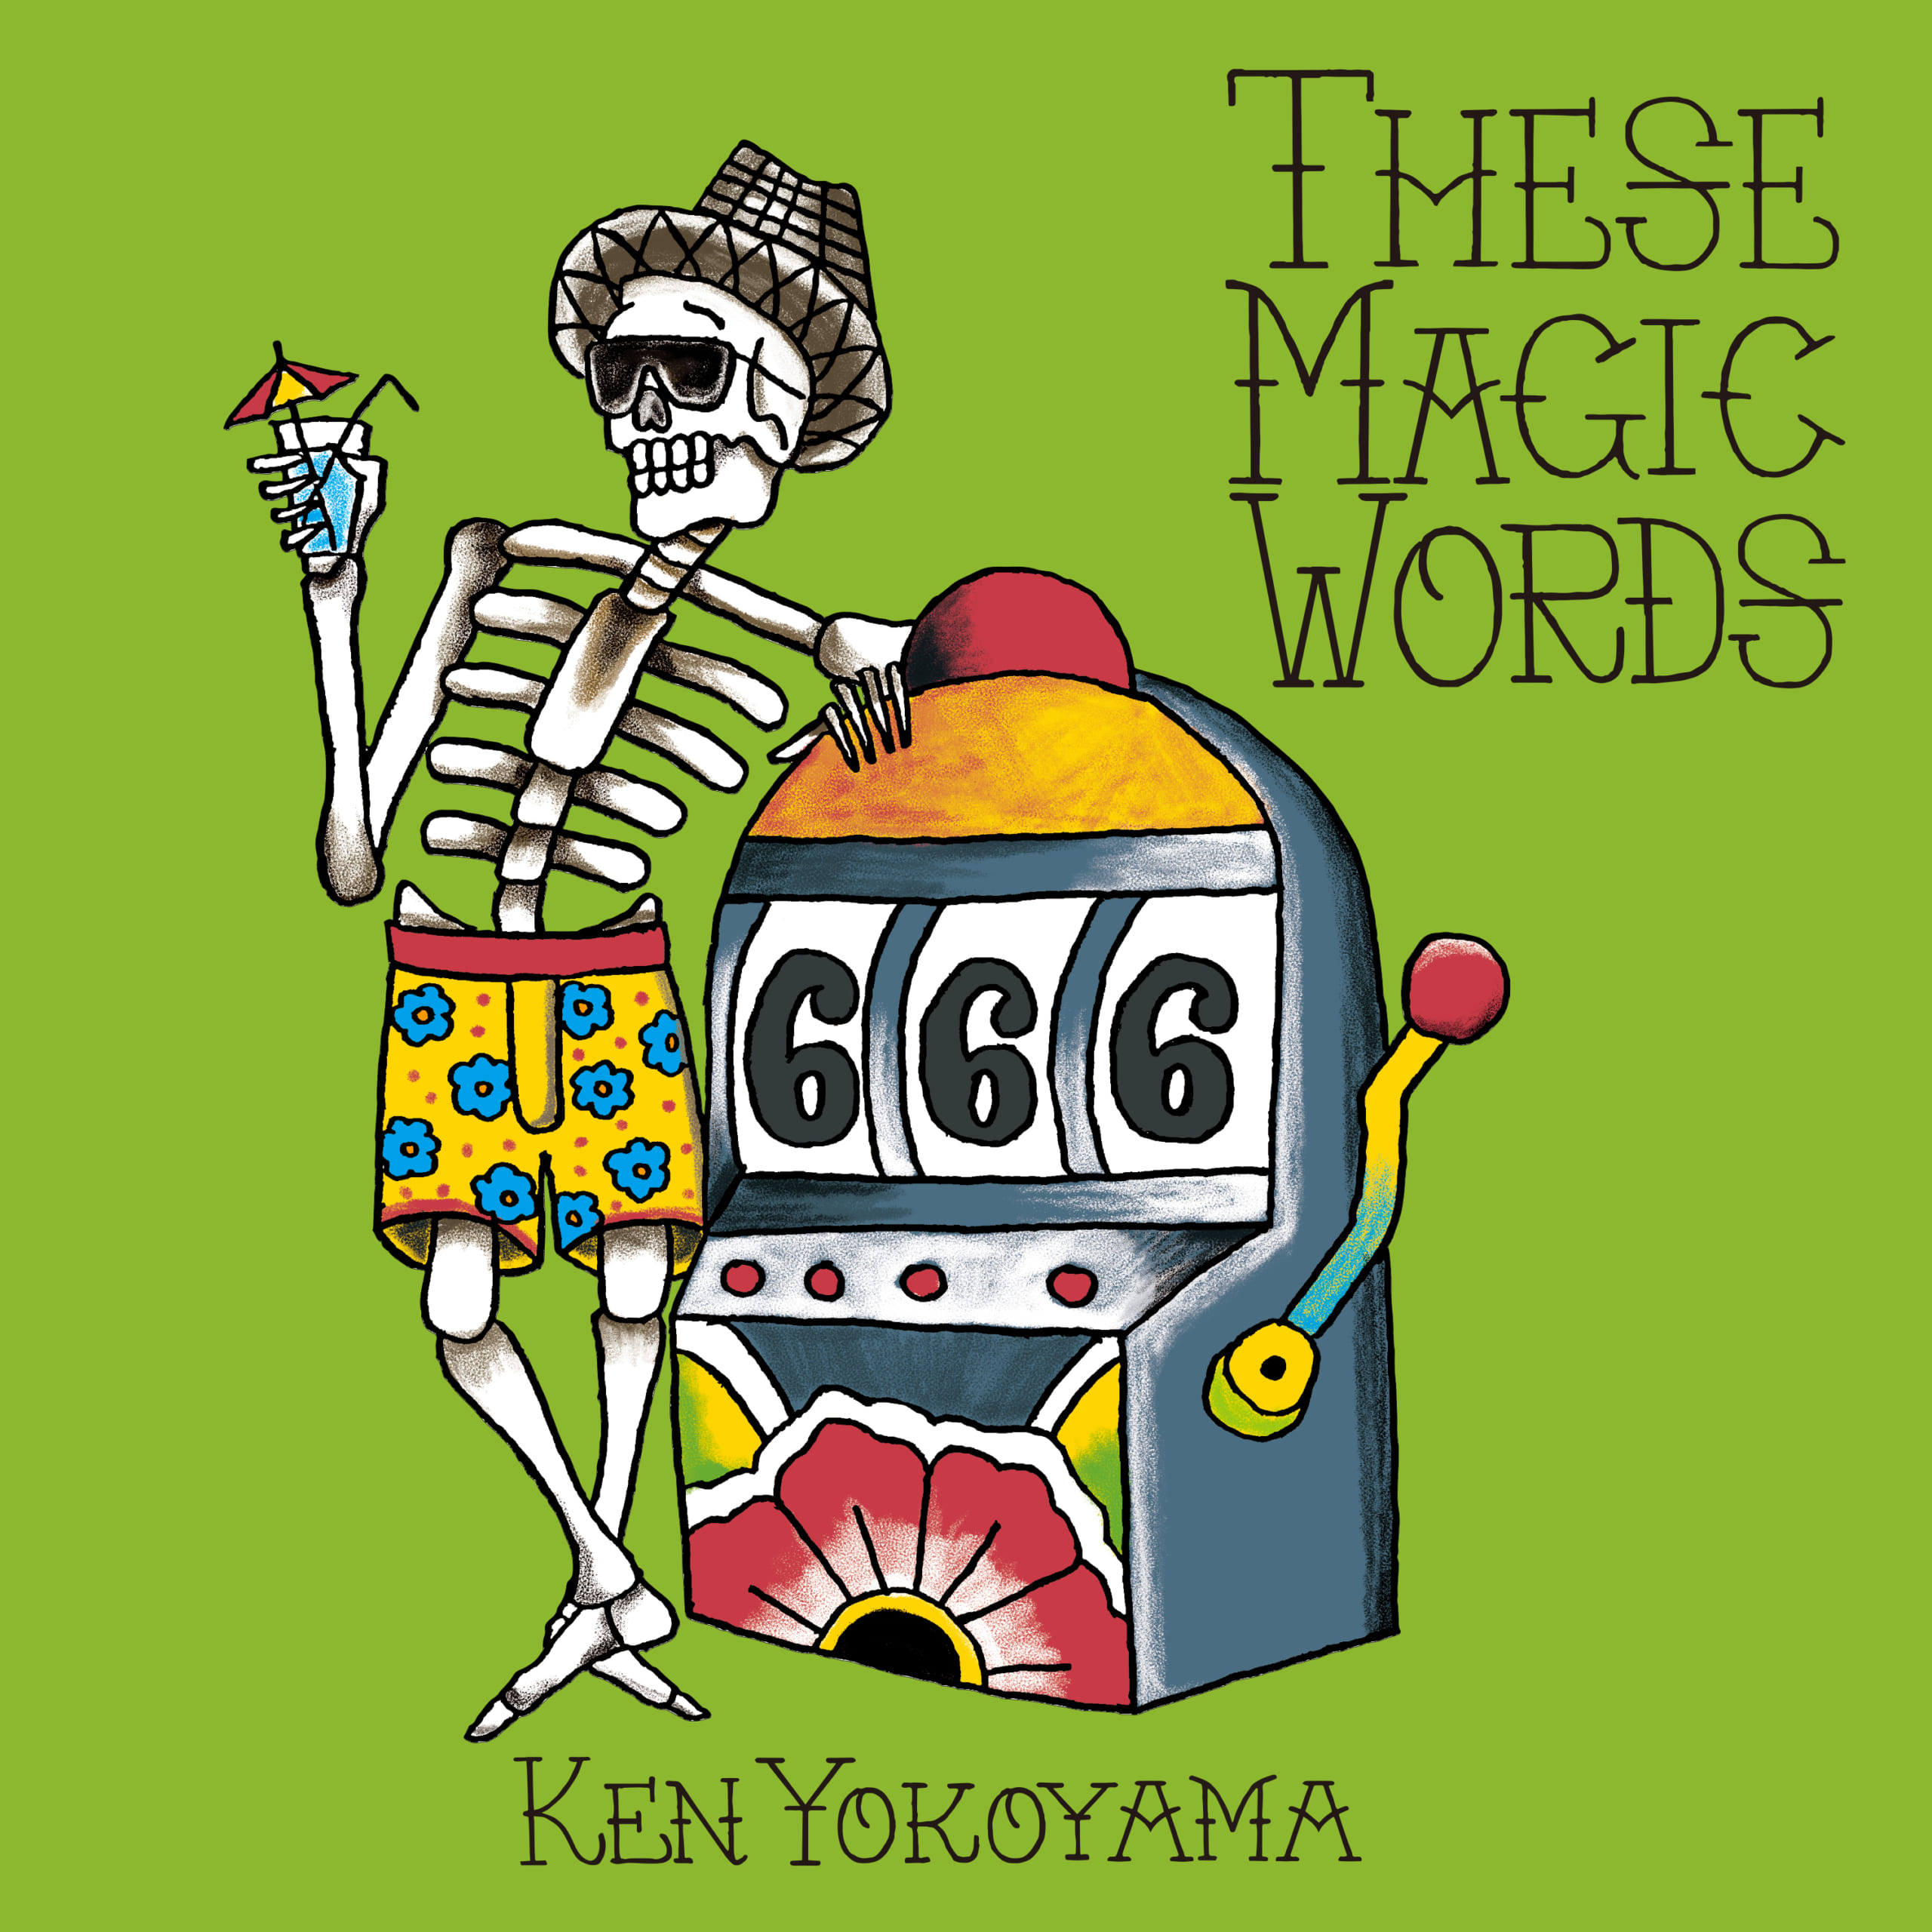 These Magic Words | Ken Yokoyama(Band) OFFICIAL SITE